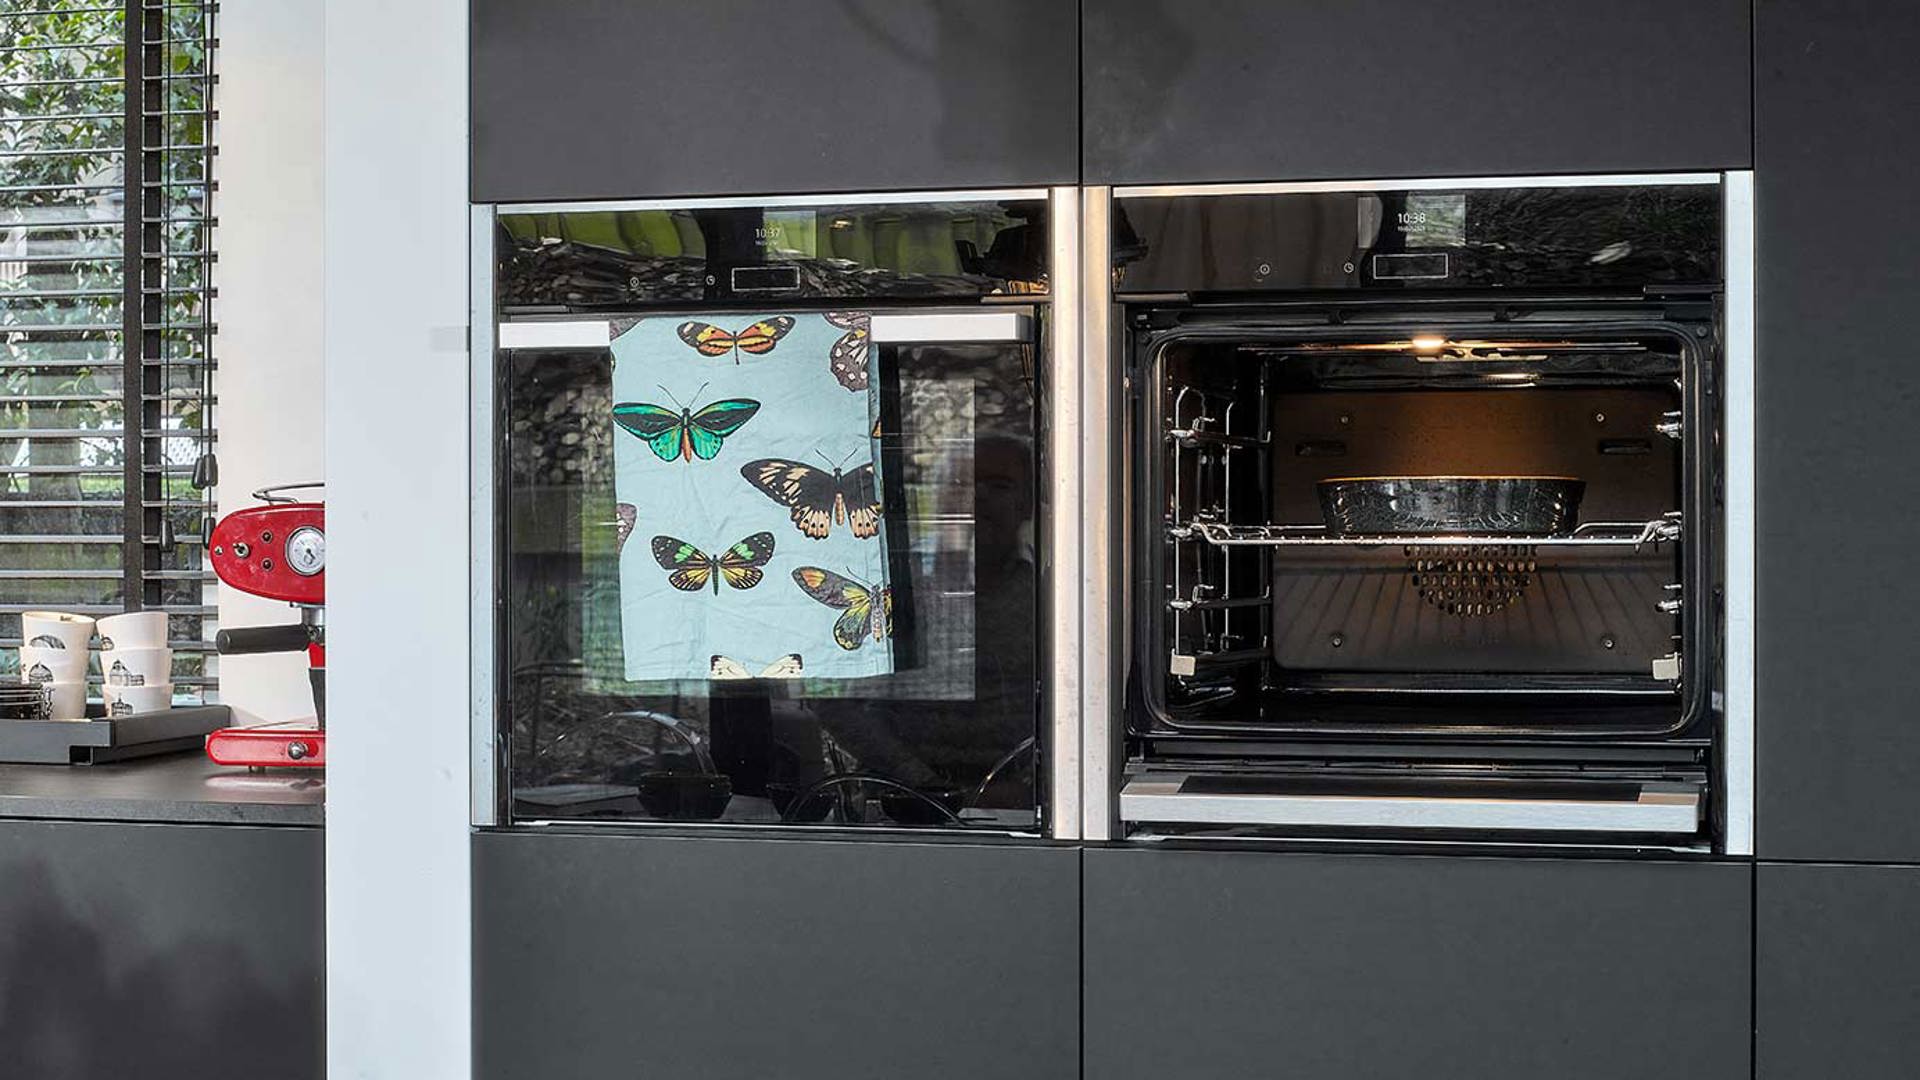 Mat zwarte keuken met eiland Utrecht, ovens